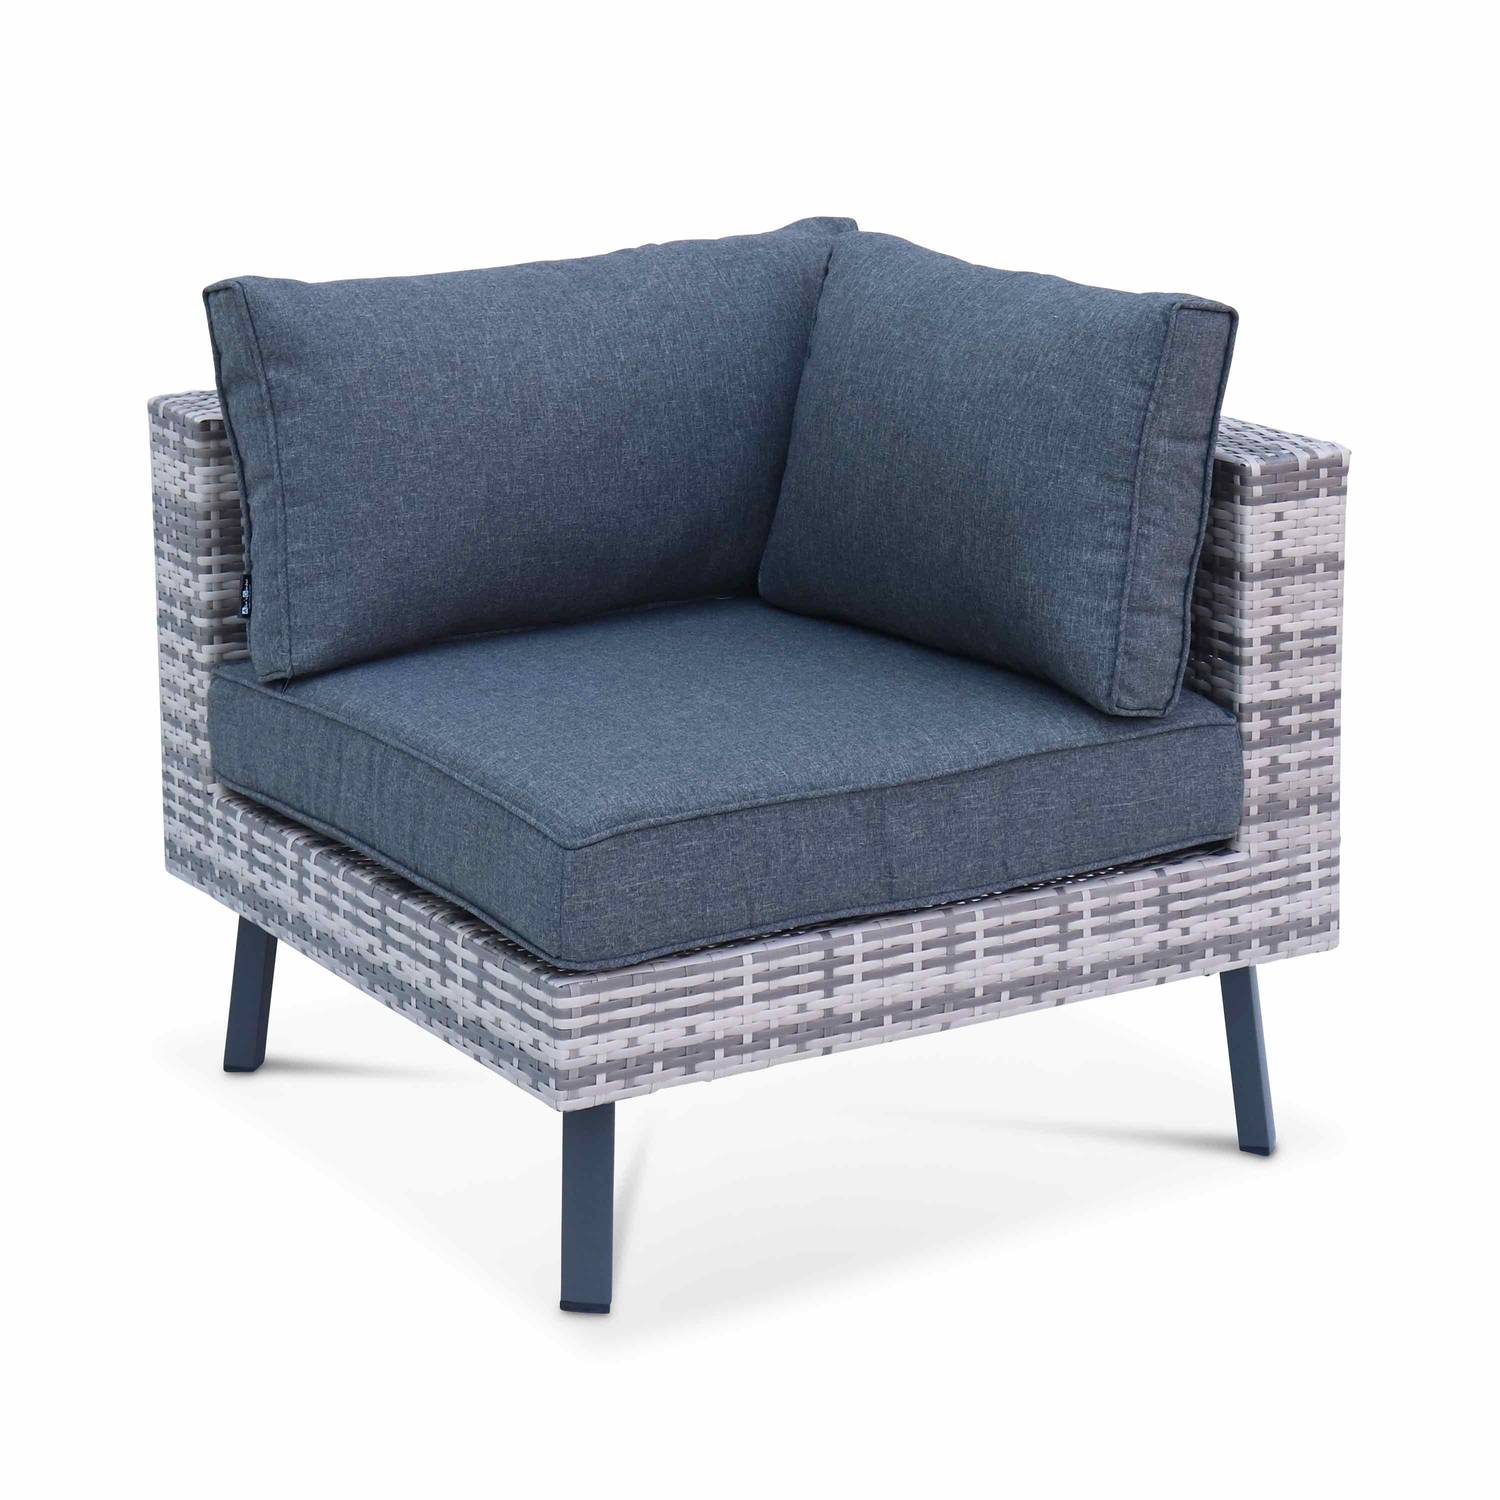 5-seater elevated polyrattan garden sofa set with stylish legs - sofa, 2 armchairs, footrest, coffee table - Alba - Mixed Grey rattan, Charcoal Grey cushions  Photo7